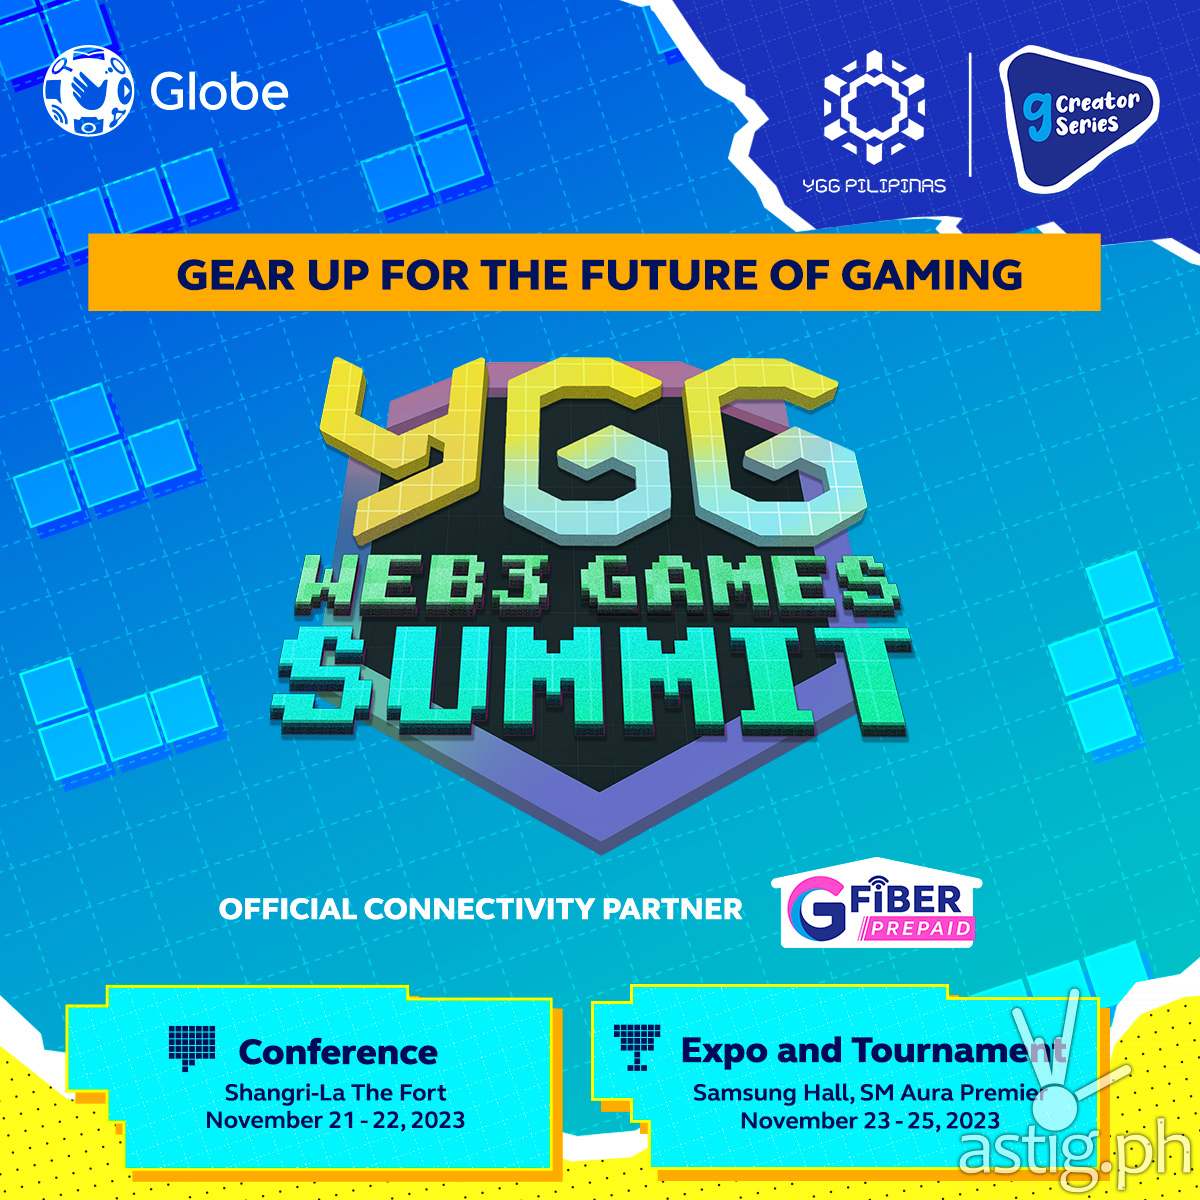 YGG Web3 Games Summit [event]